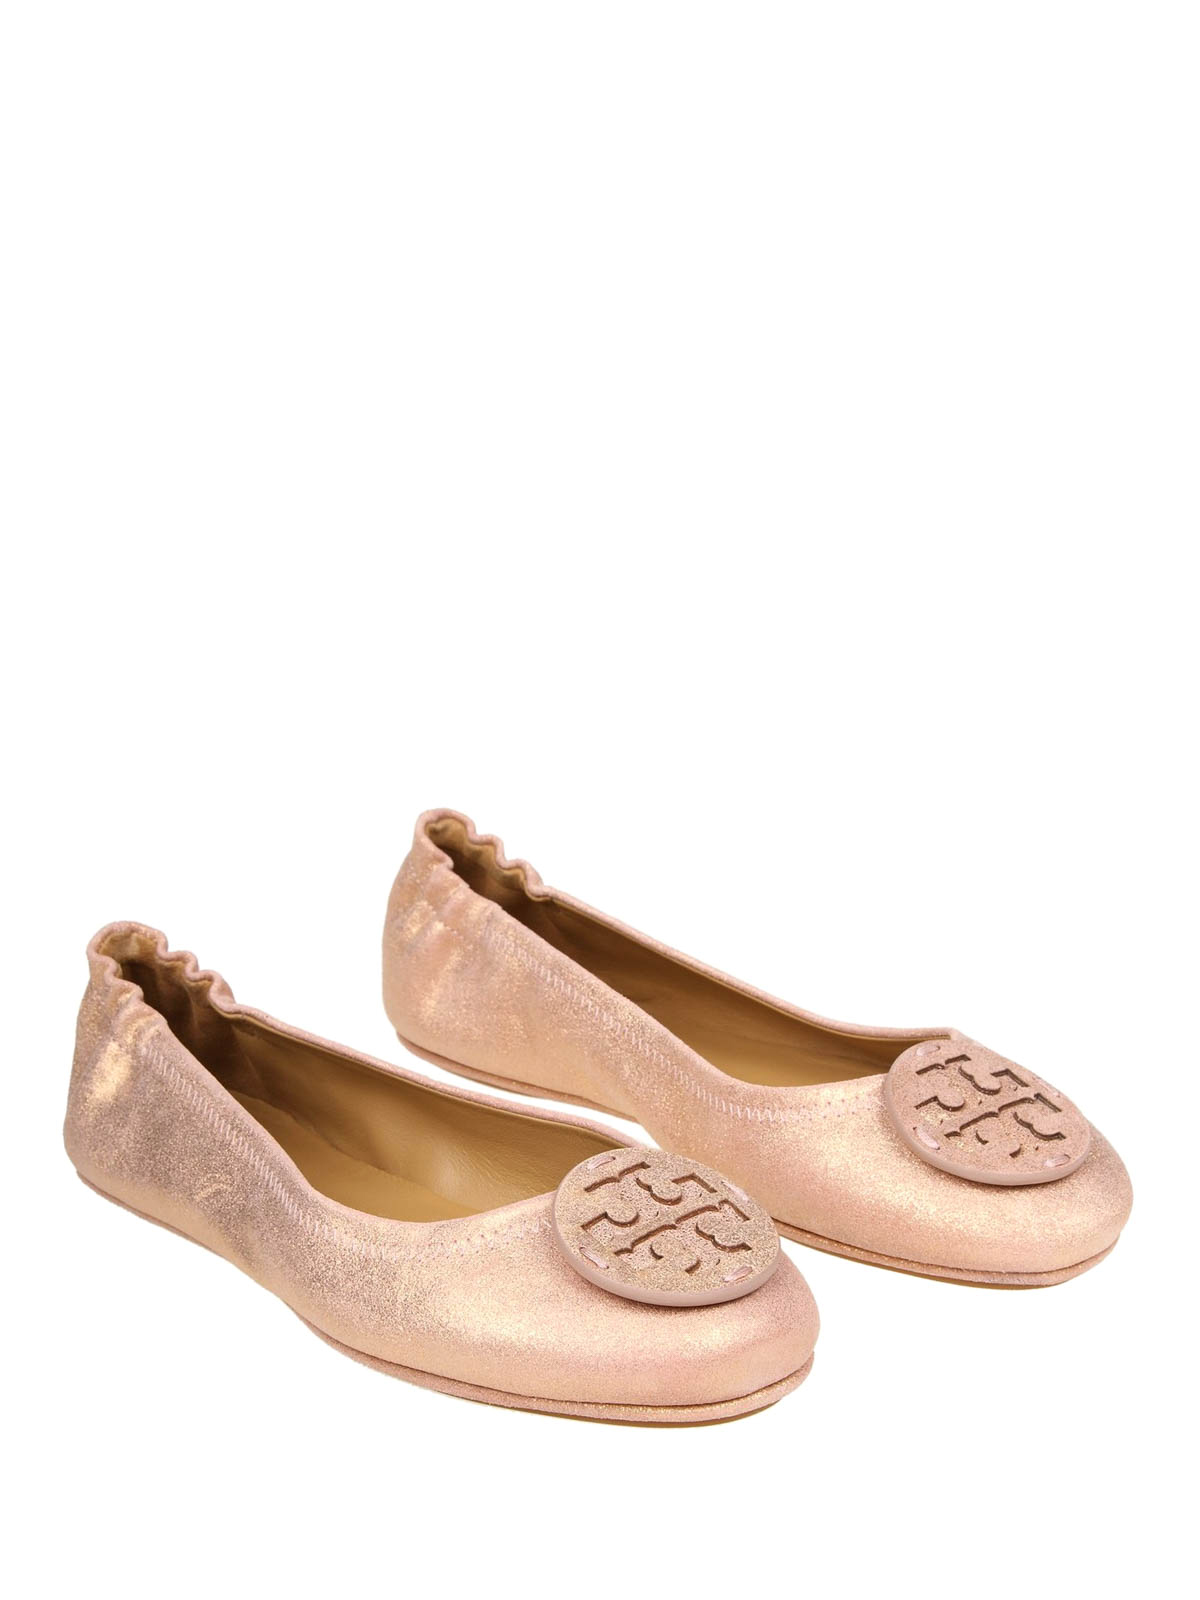 Flat shoes Tory Burch - Minnie pink metallic leather folding flats -  53289654